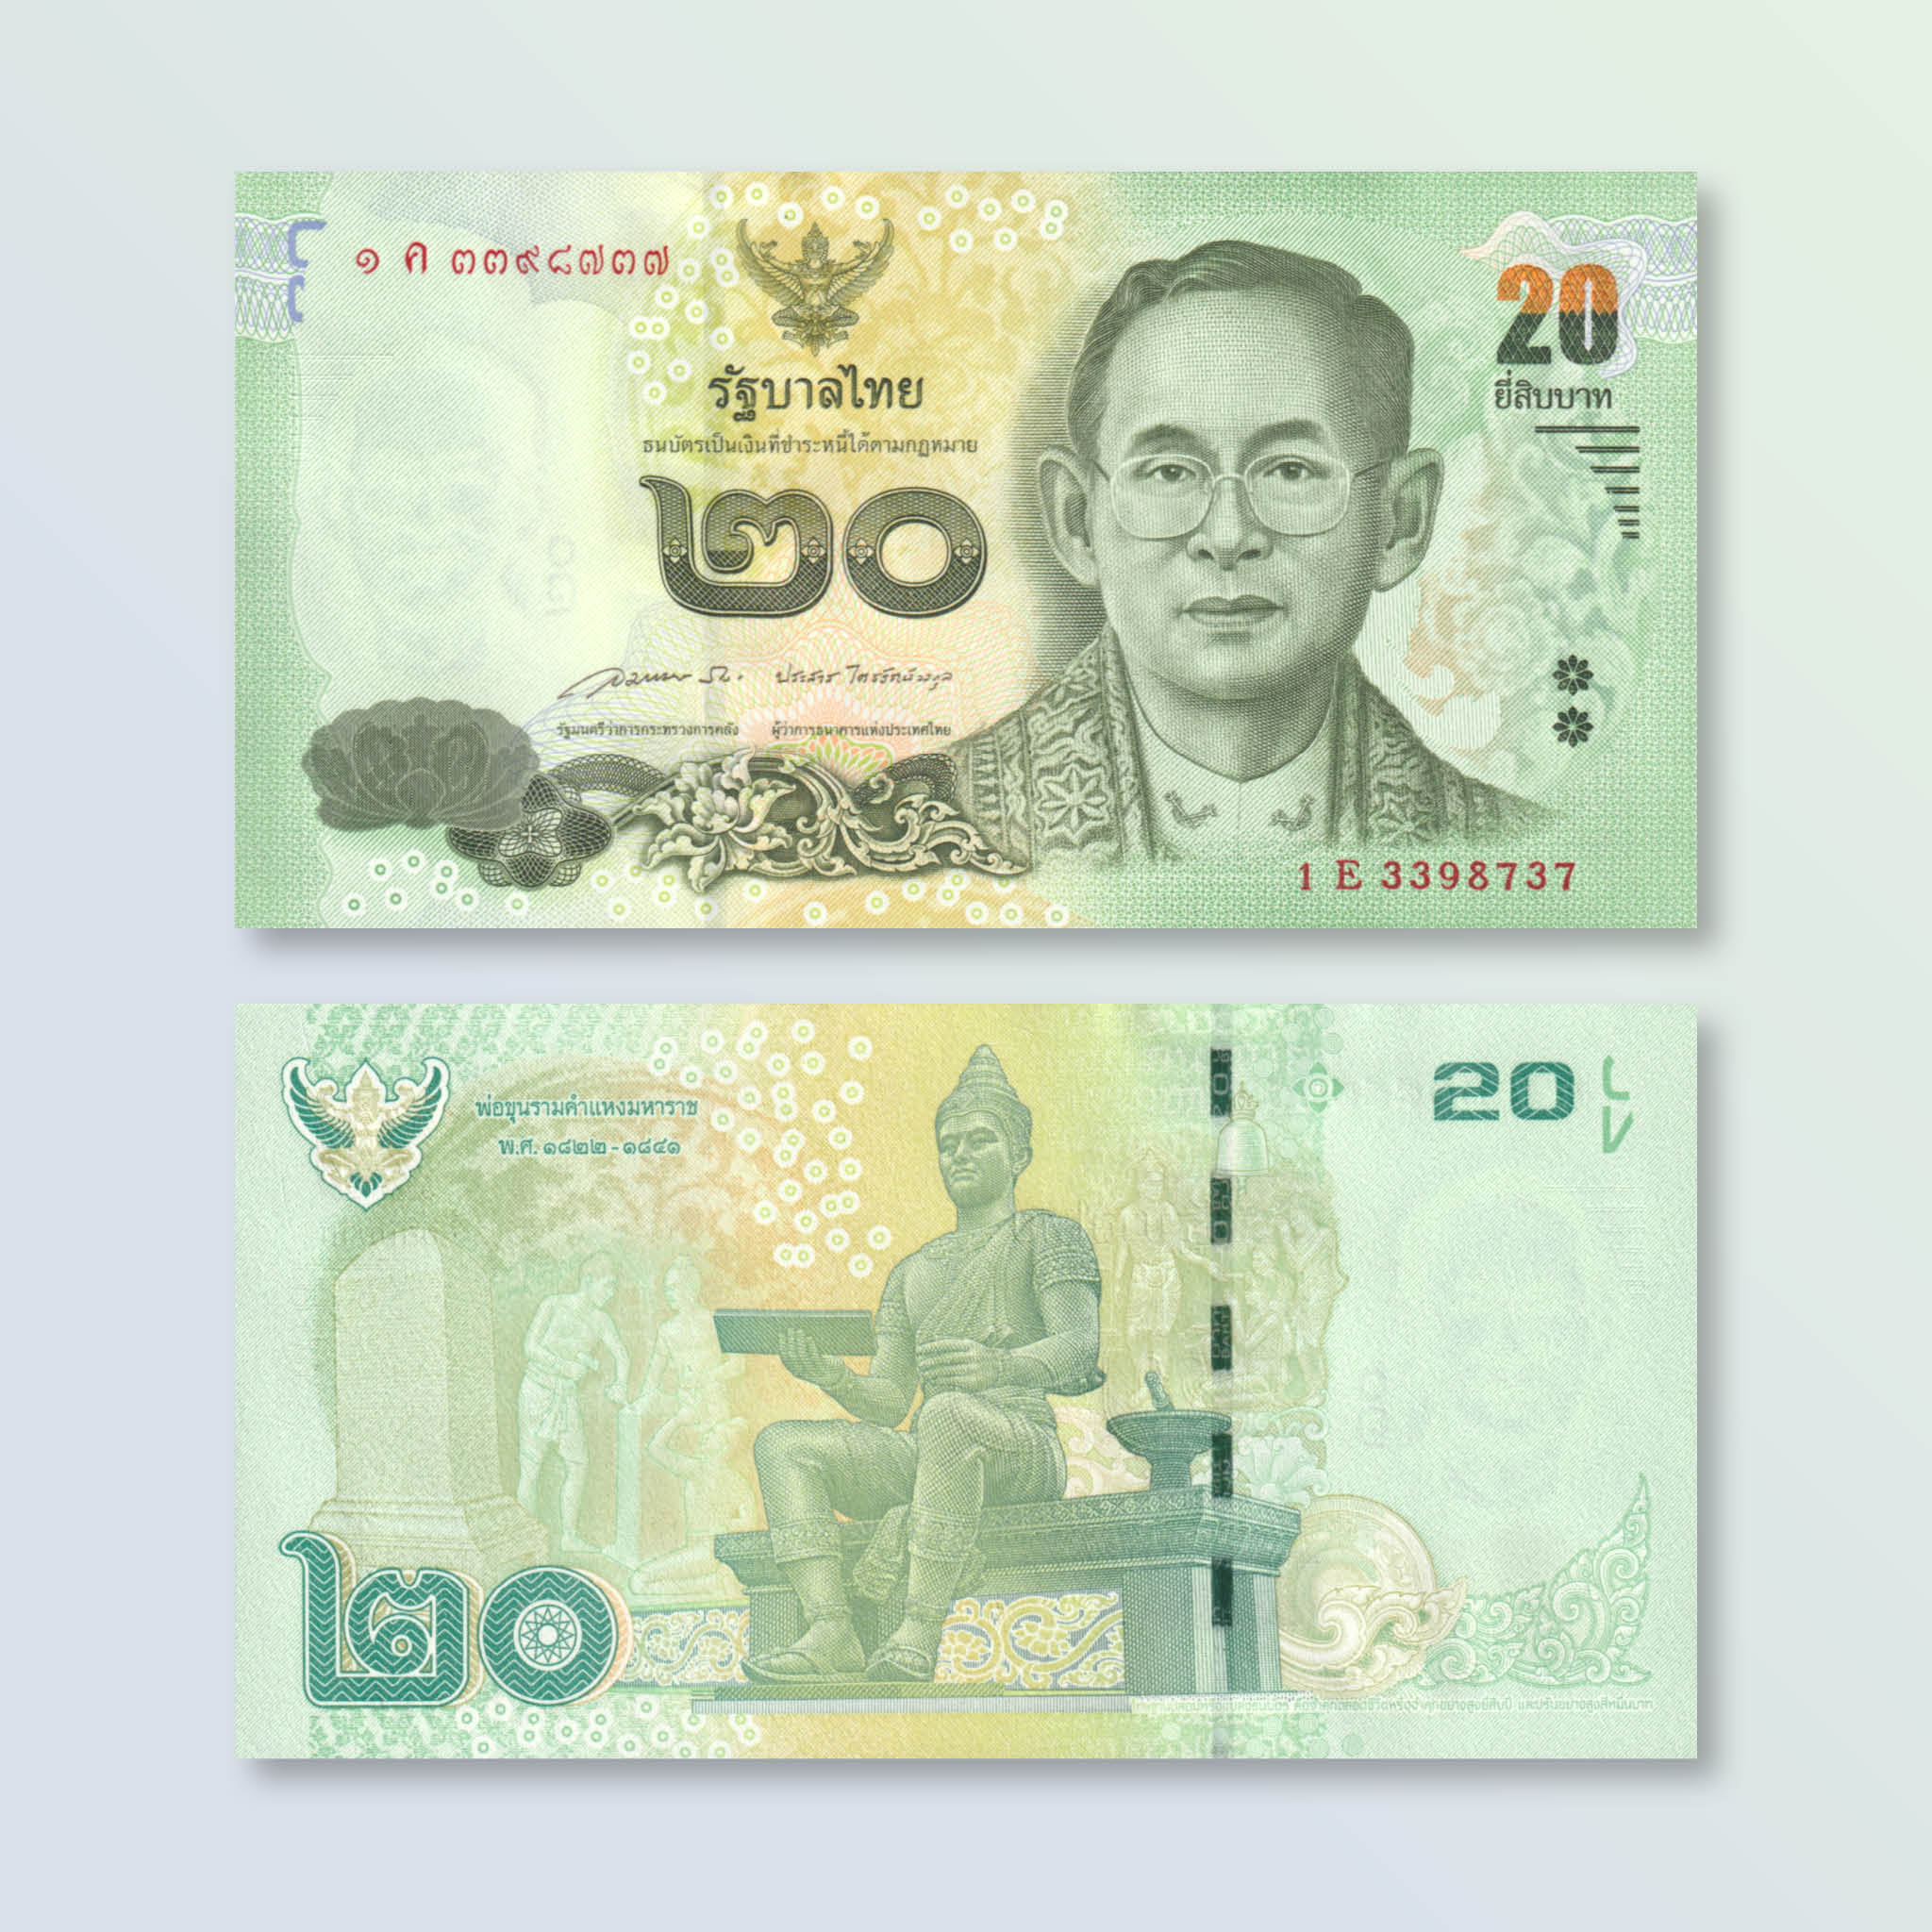 Thailand 20 Baht, 2014, B181b, P118, UNC - Robert's World Money - World Banknotes